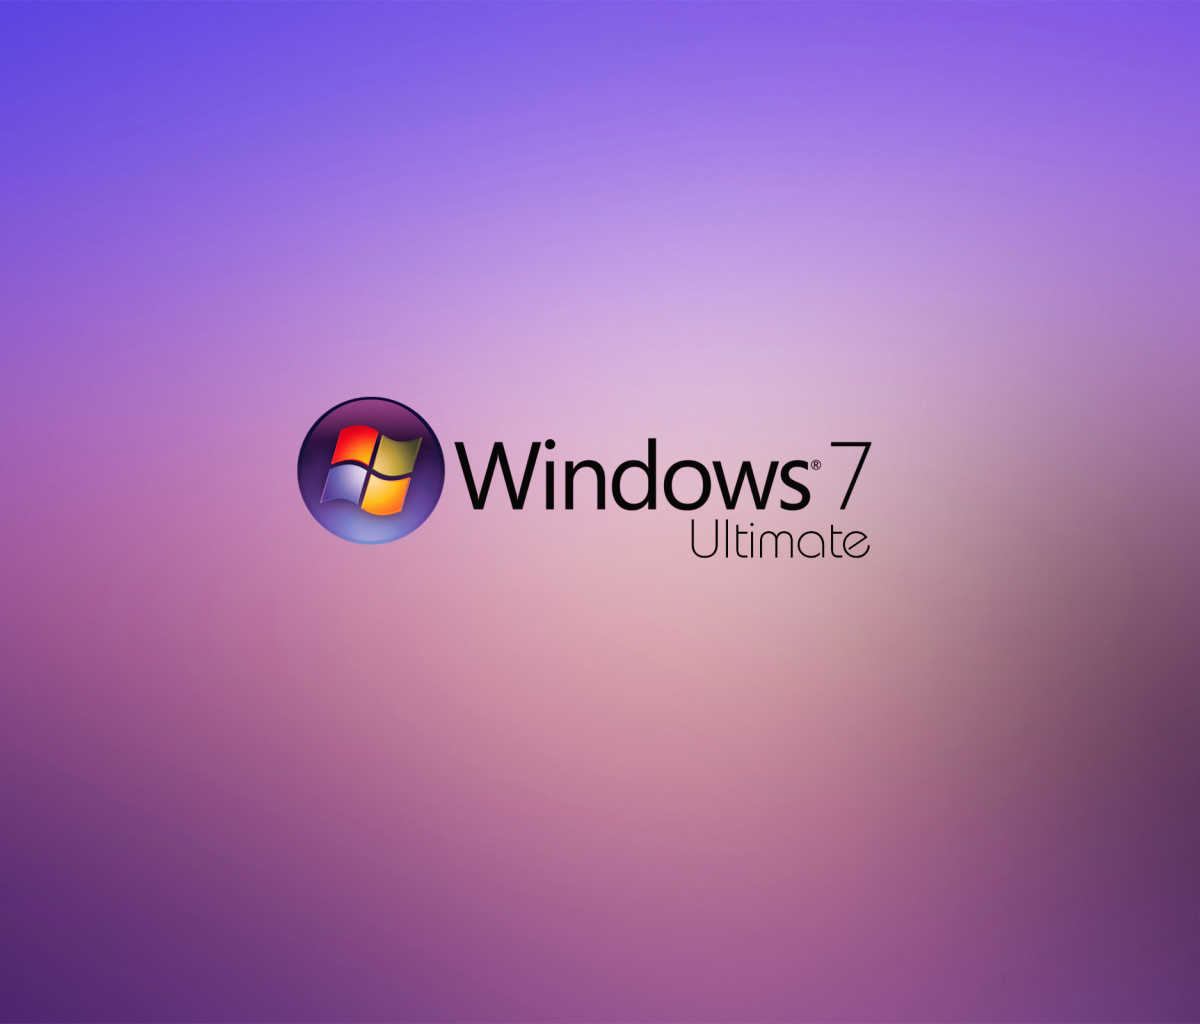 Windows 7 Ultimate wallpaper 1200x1024